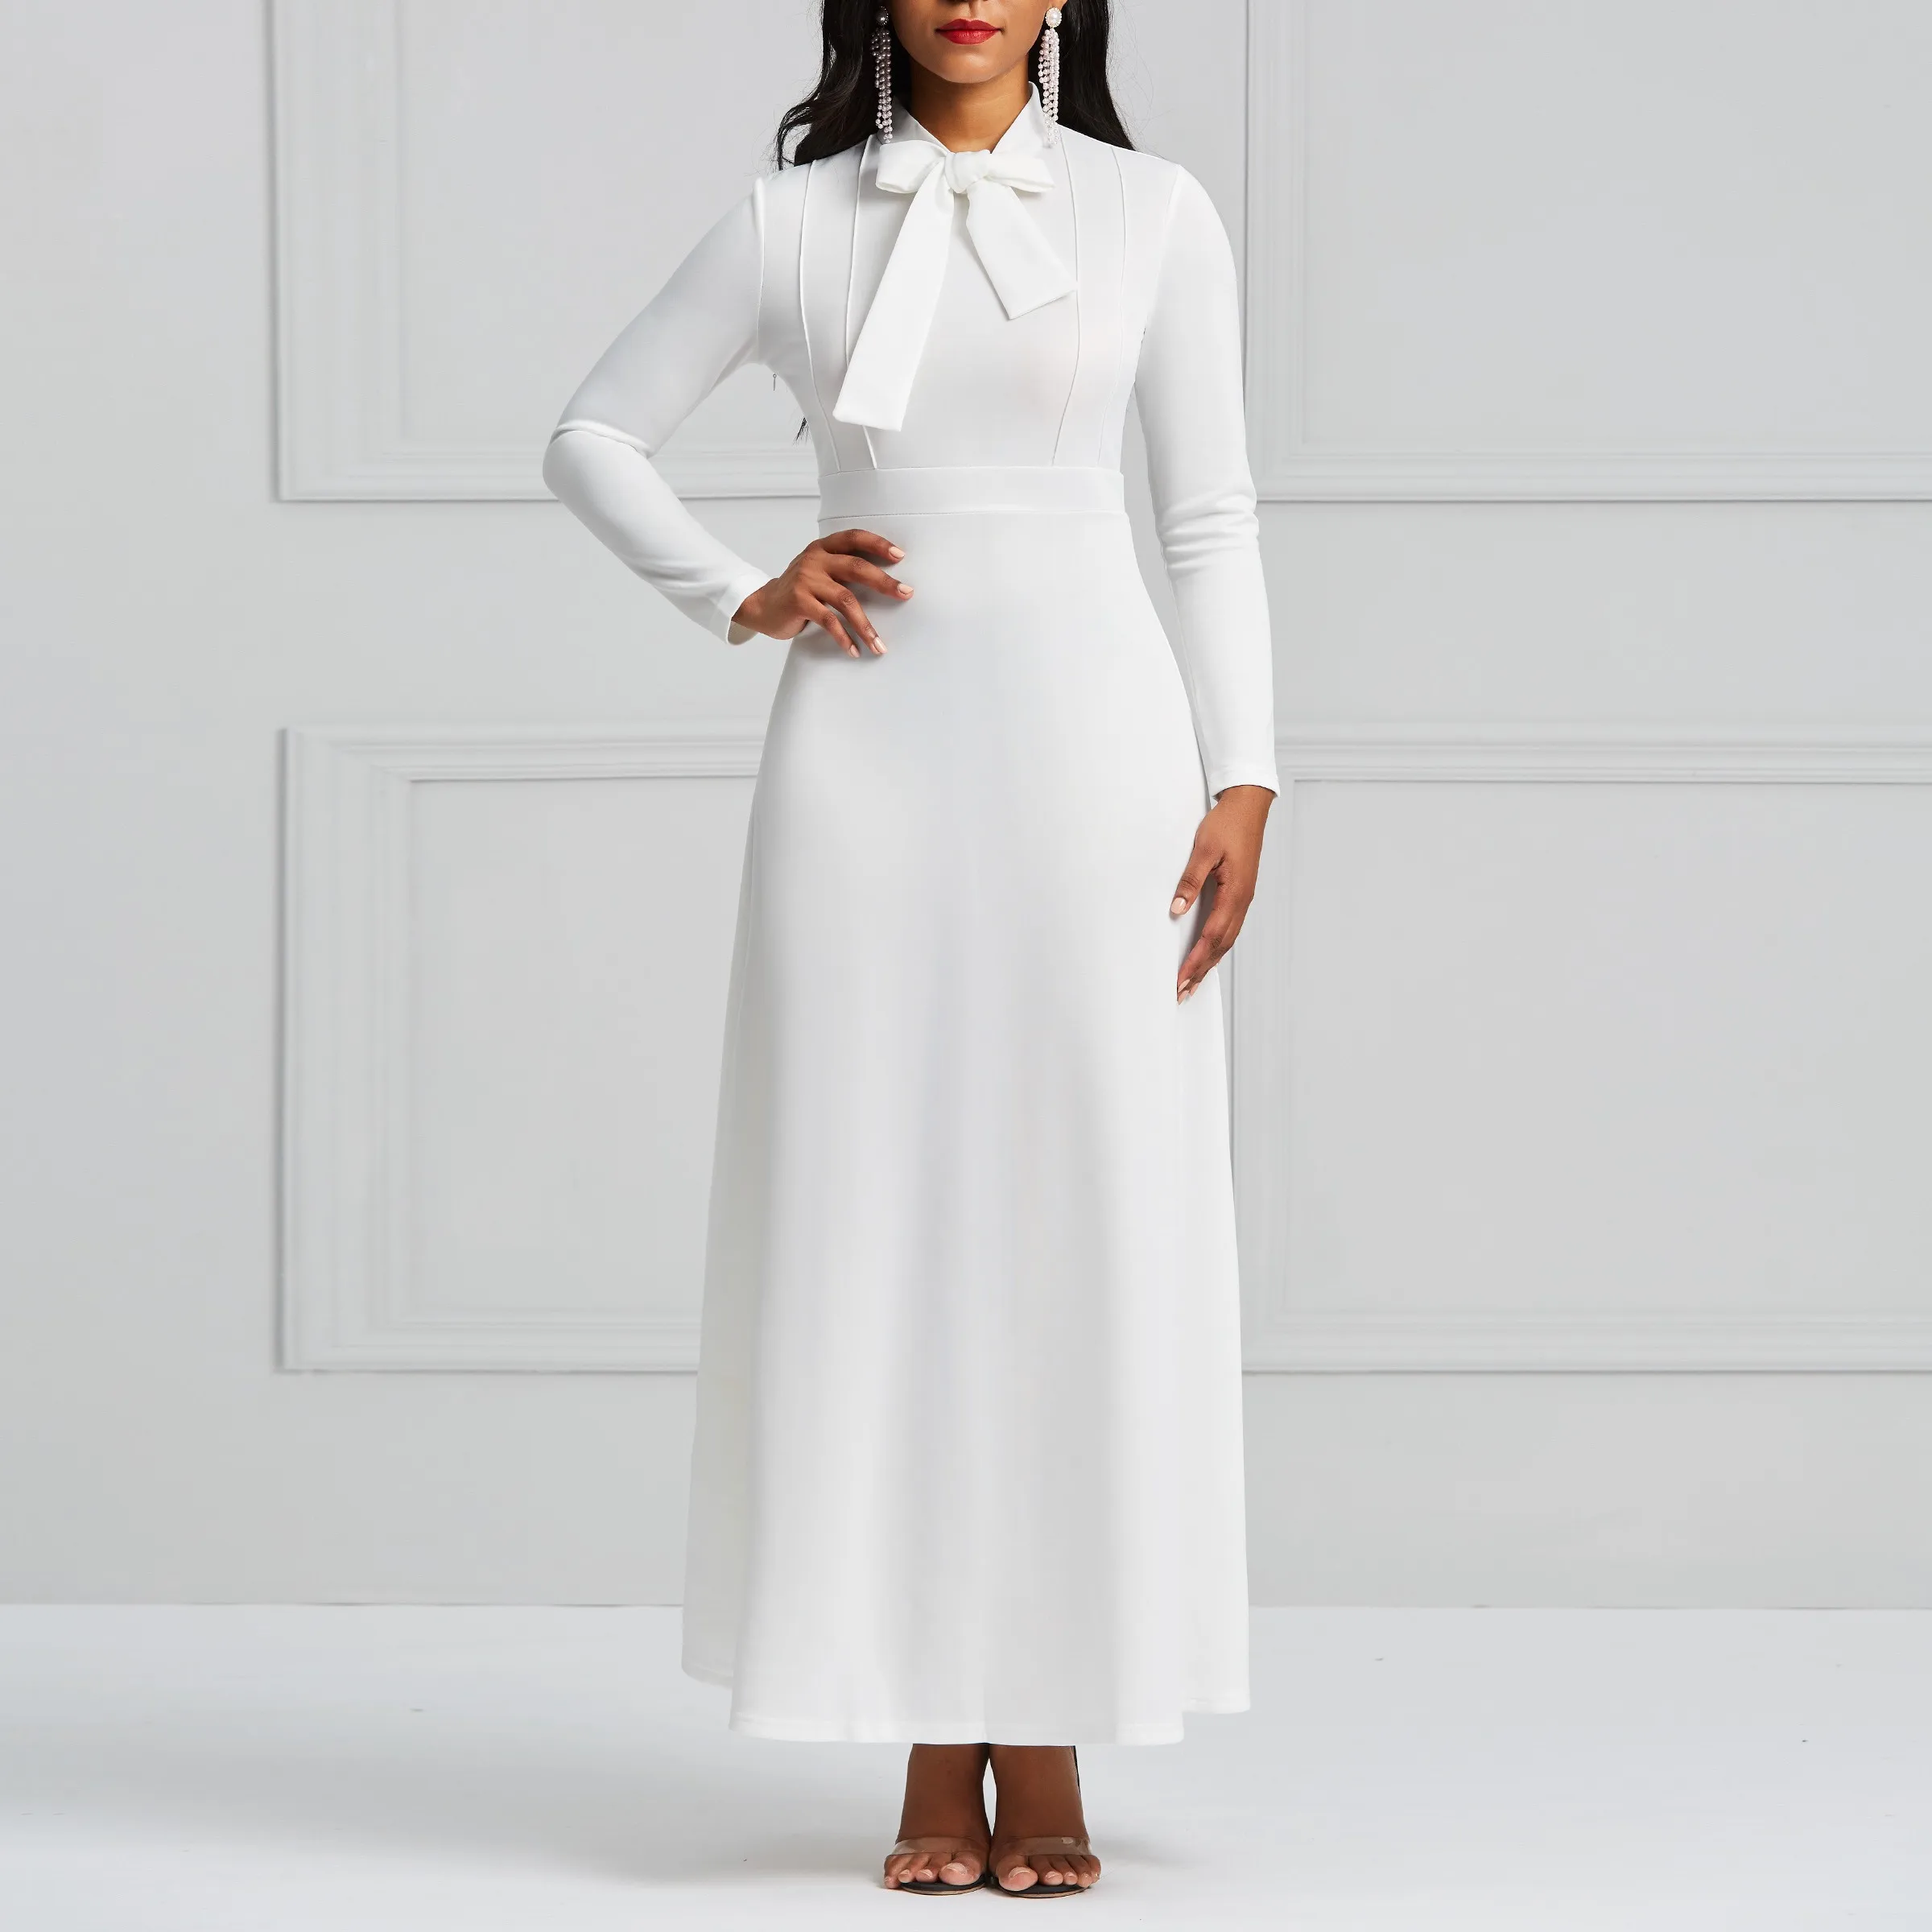 Clocolor White Long Dress Women Antumn Spring Long Sleeve Bowknot Plain Simple Office Ladies